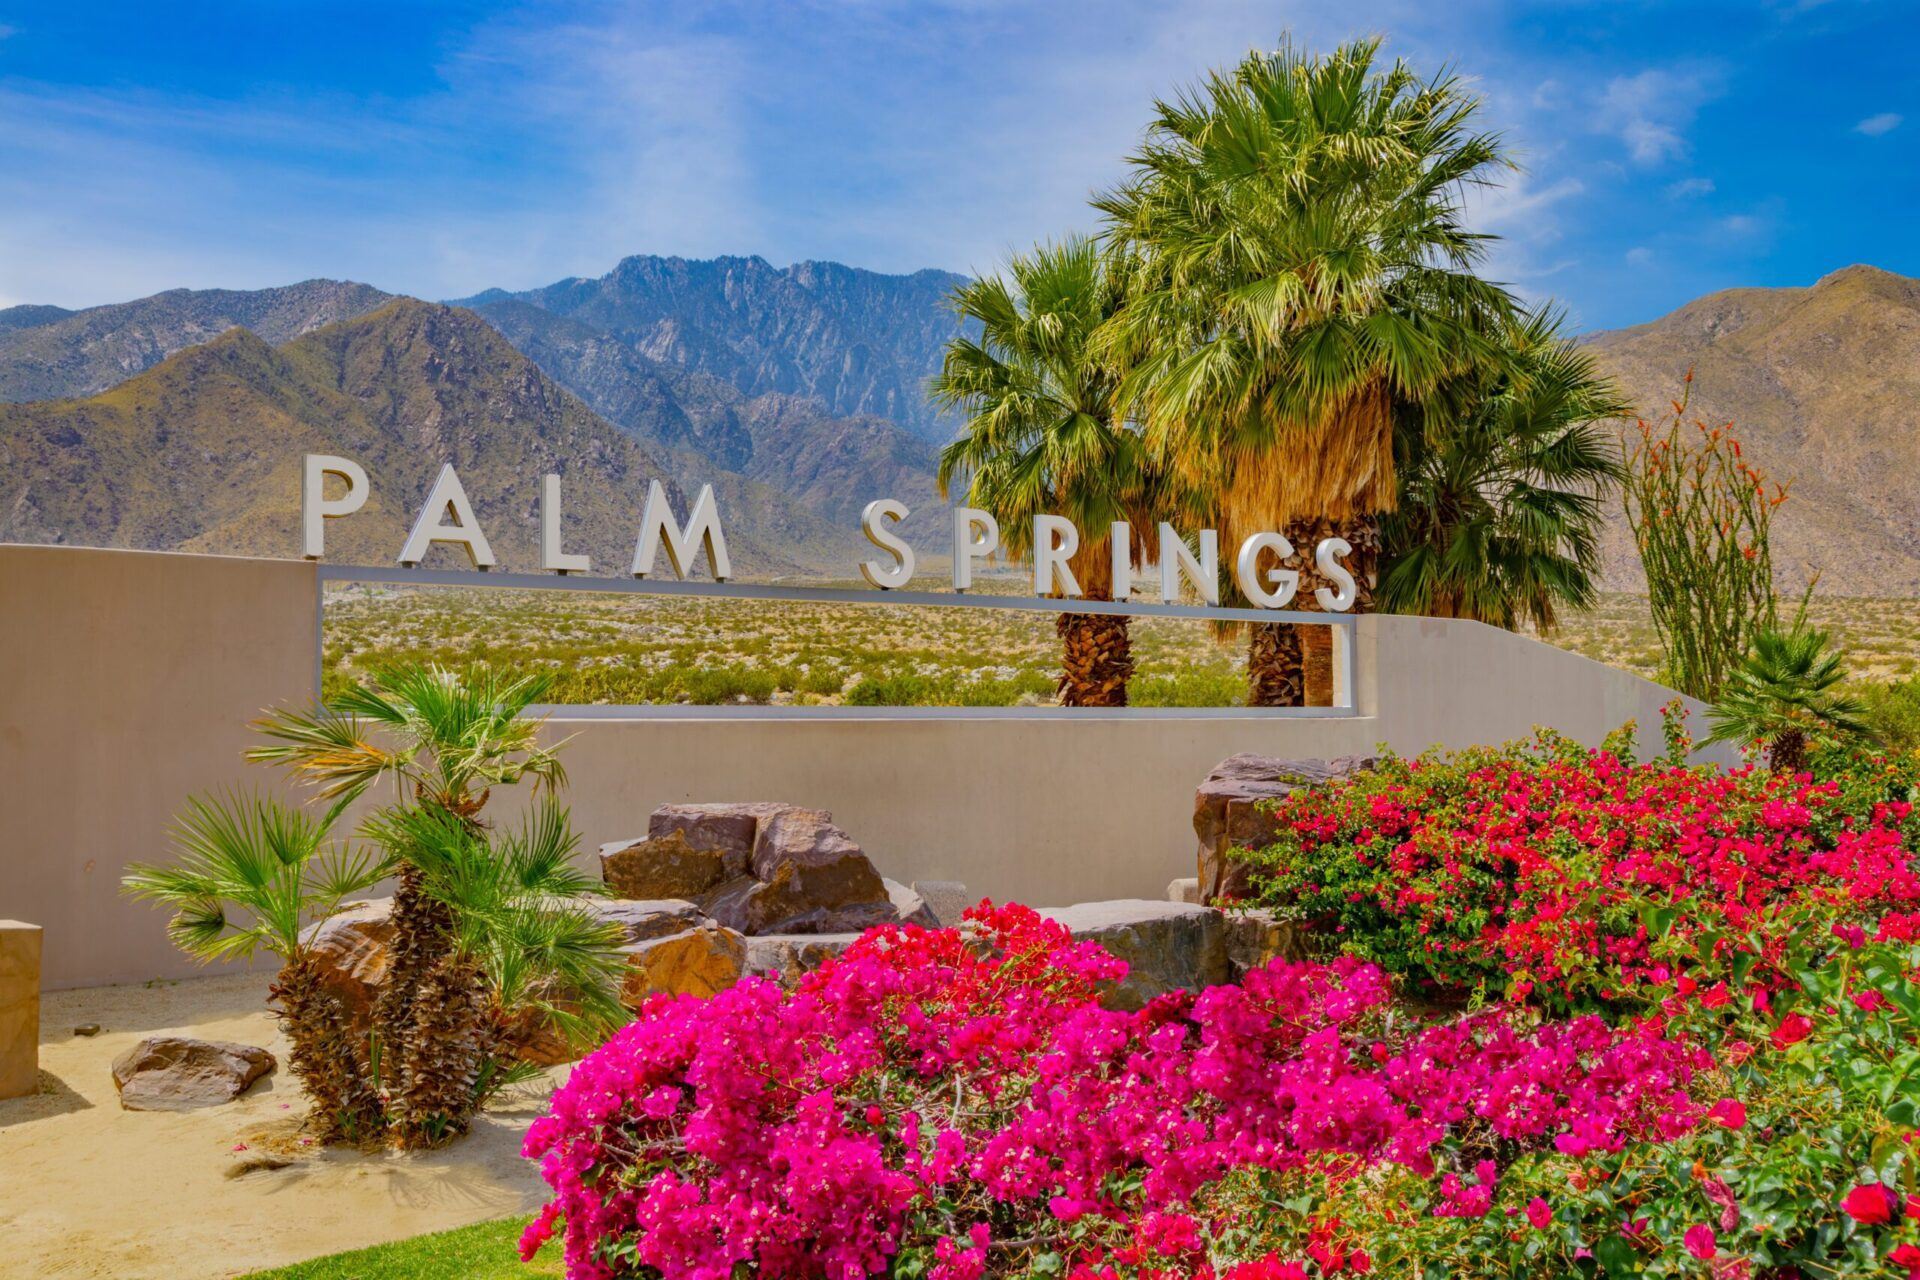 Photo credit: Palm Springs Bureau of Tourism